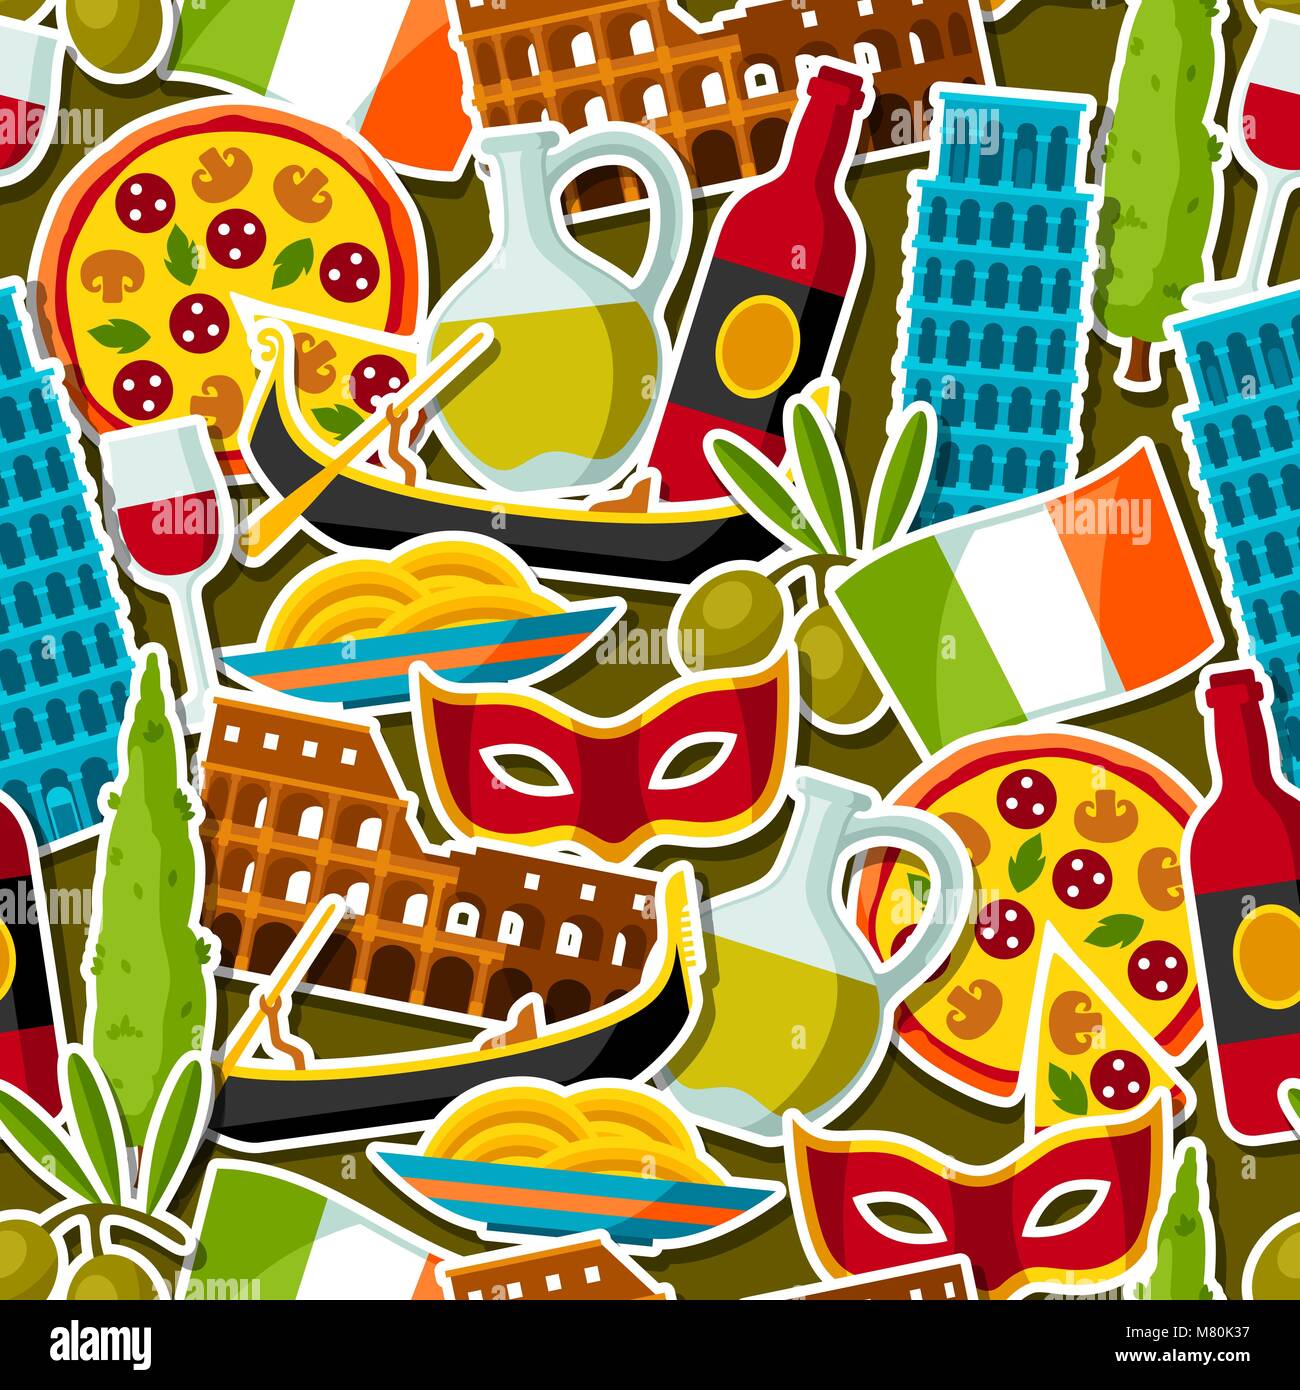 Italy seamless pattern. Italian sticker symbols and objects Stock Vector